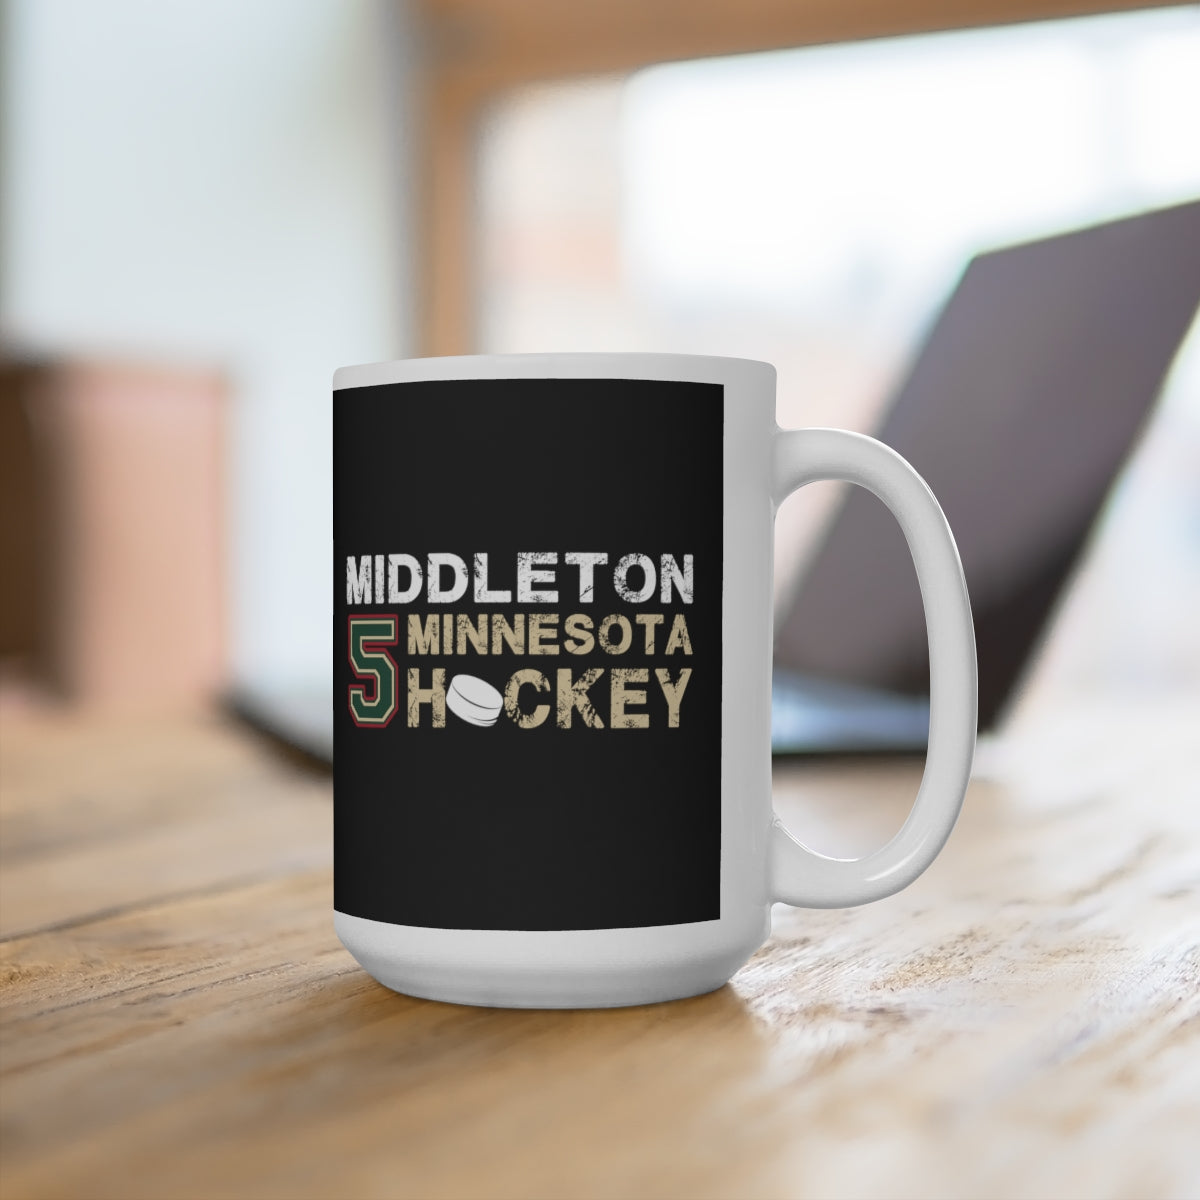 Middleton 5 Minnesota Hockey Ceramic Coffee Mug In Black, 15oz